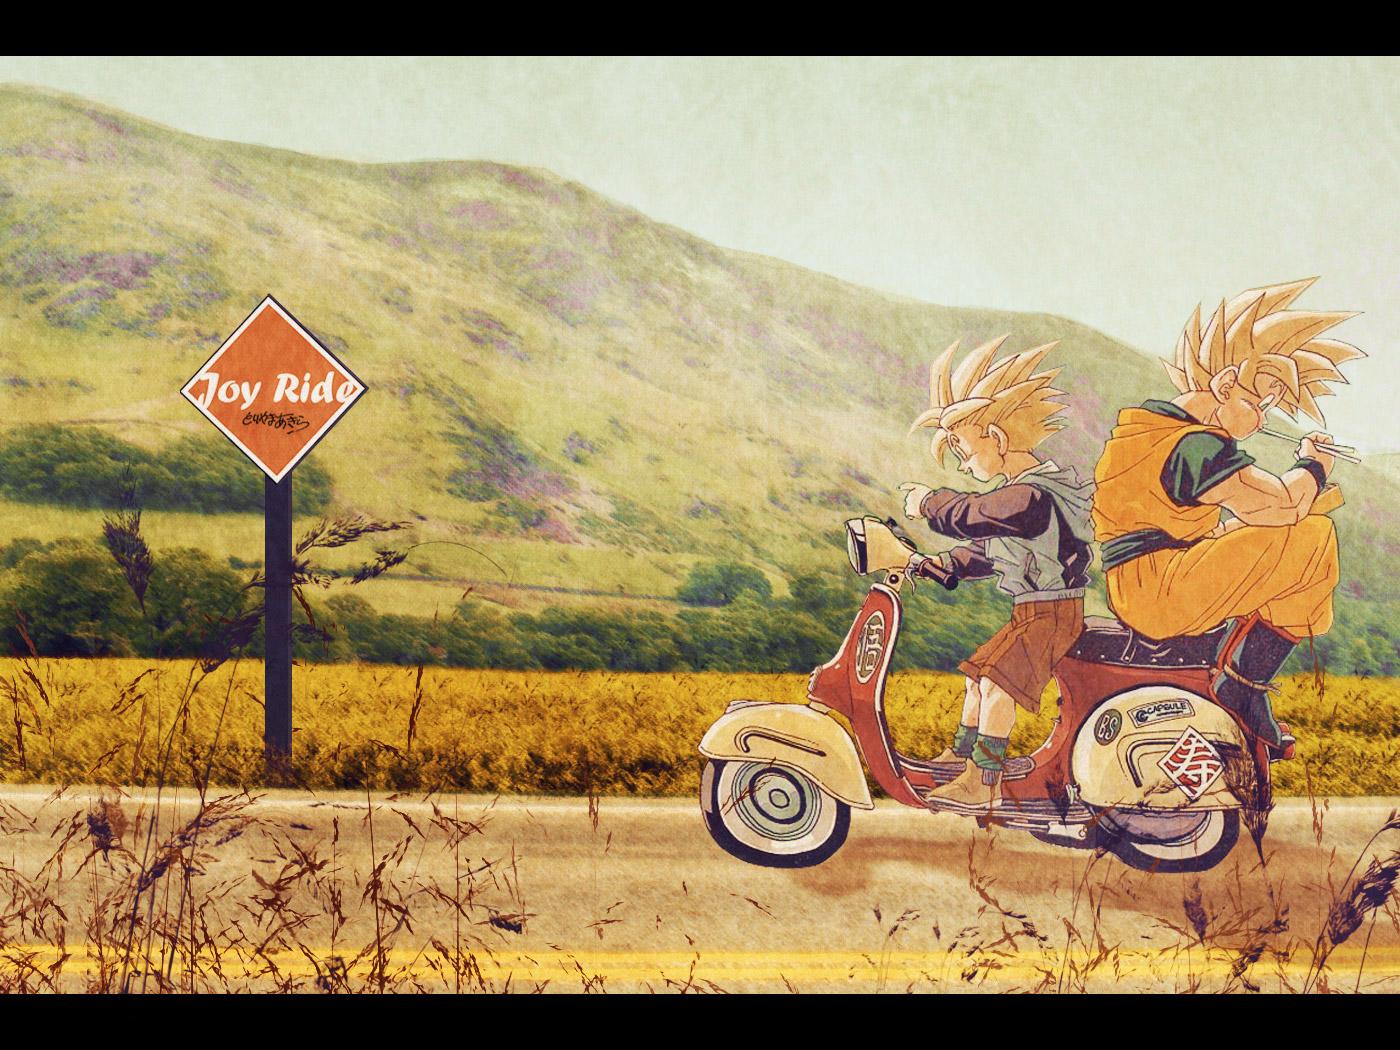 Goku and Gohan from Dragon Ball in a high-resolution desktop wallpaper.